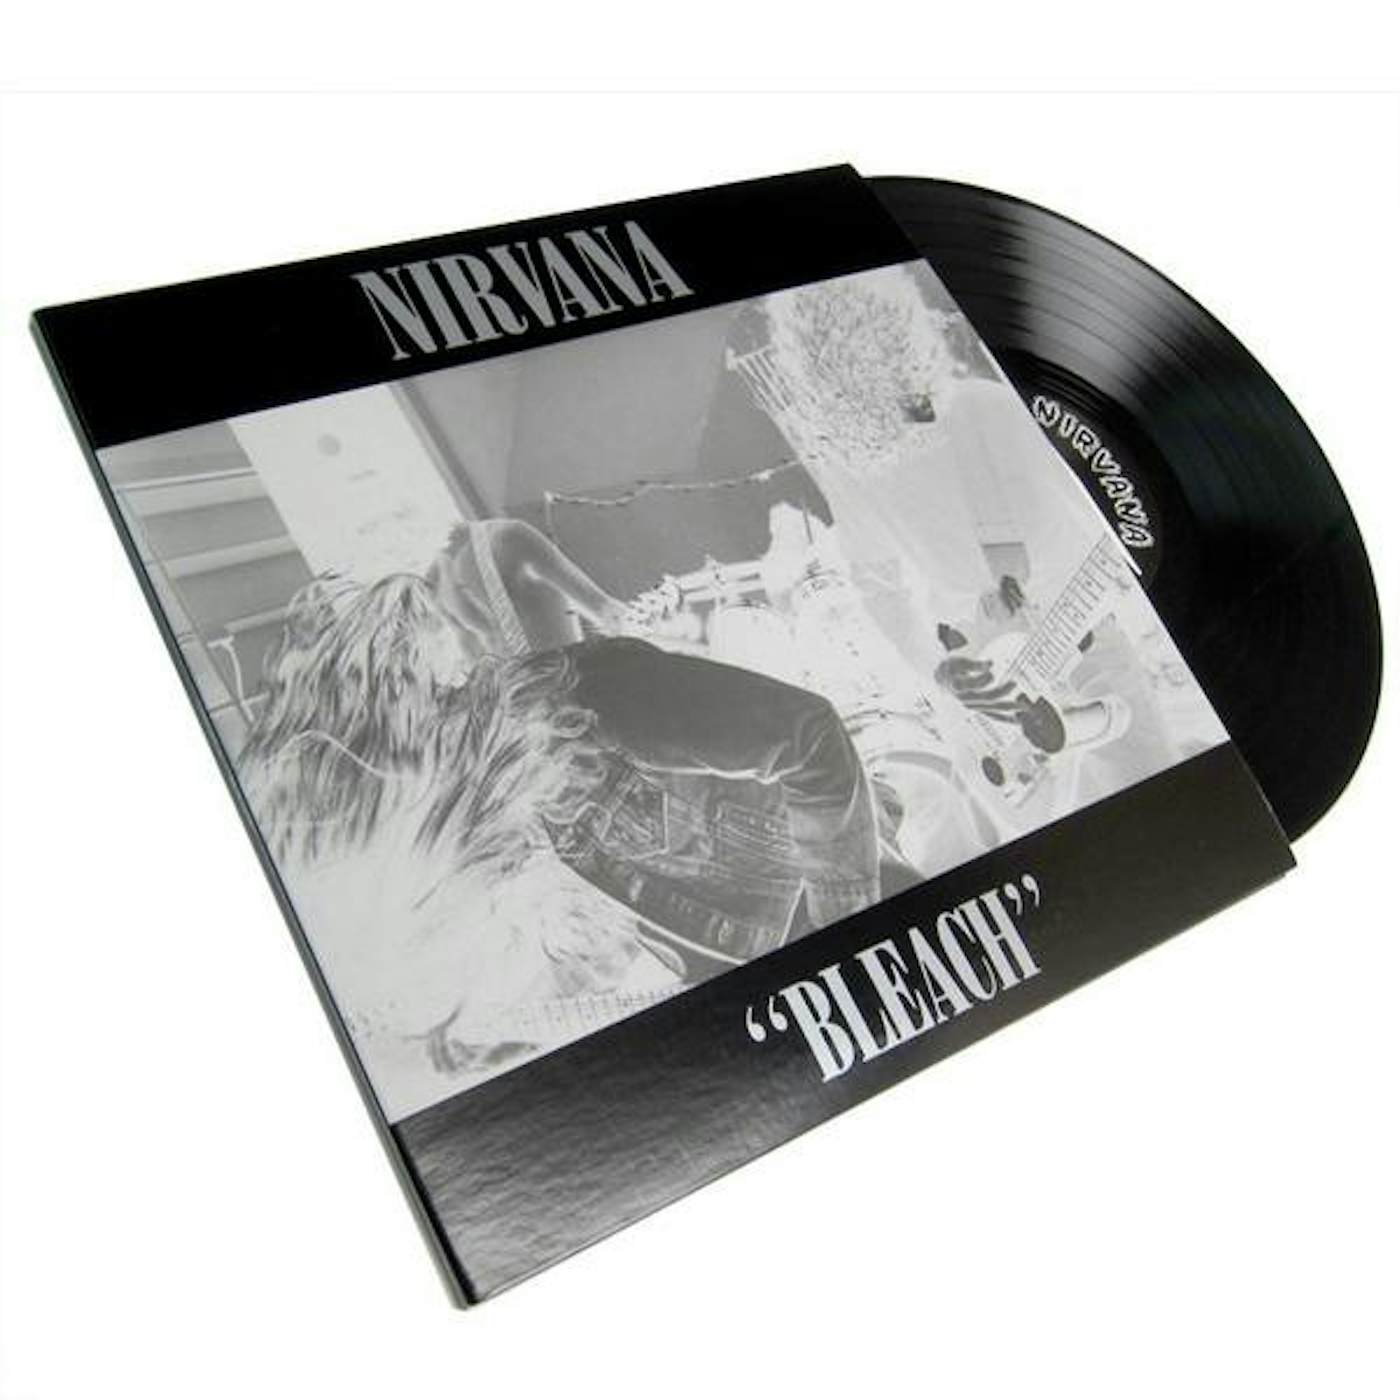 Nirvana BLEACH (DELUXE) Vinyl Record